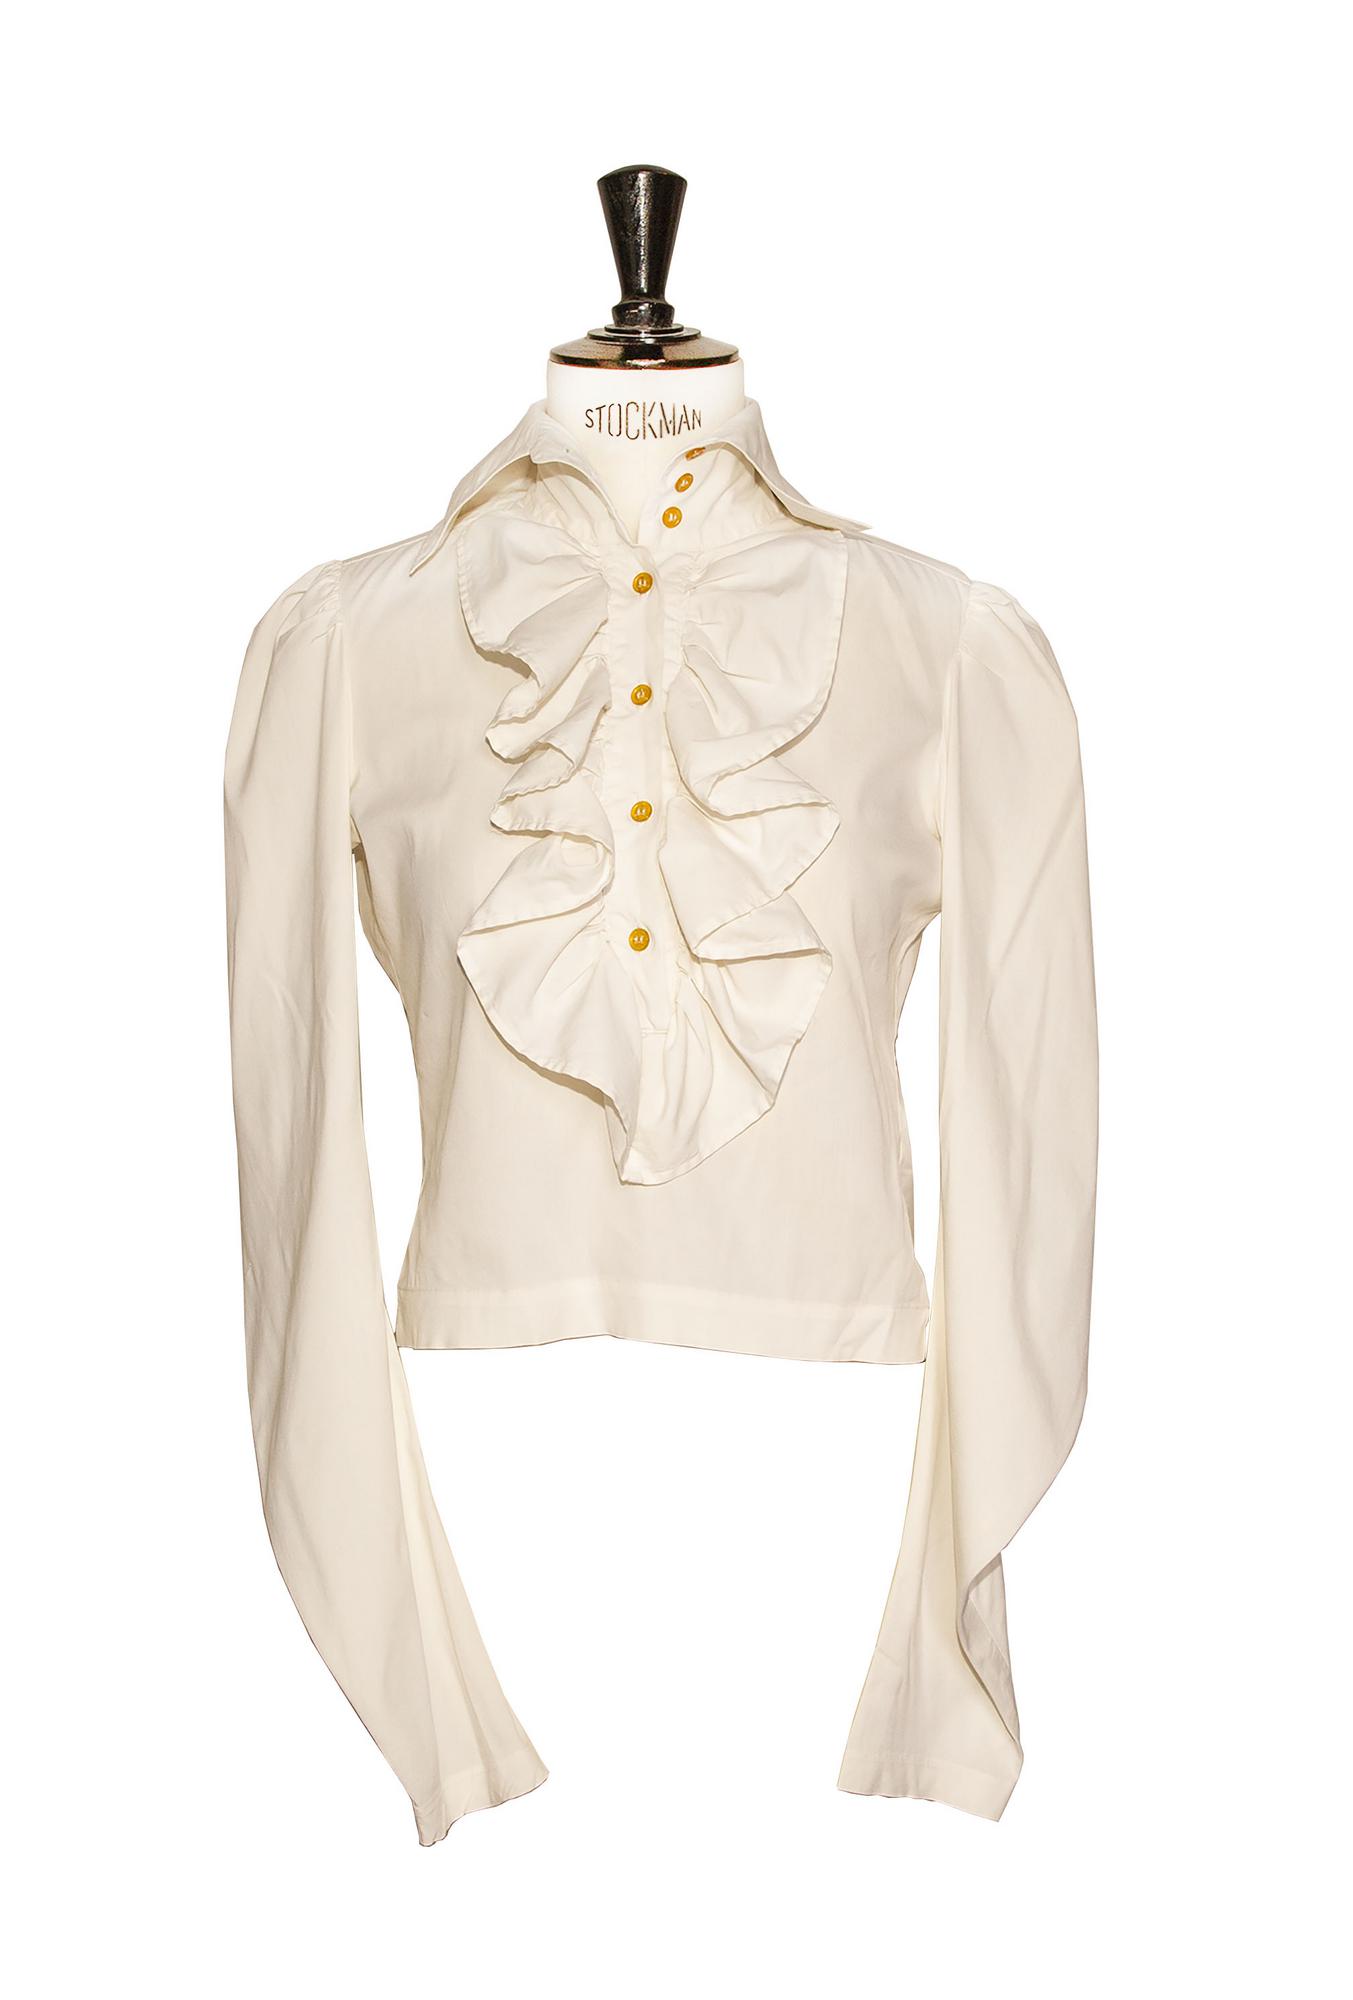 Vivienne Westwood FRILLY STRETCH SHIRT Description: White stretch cotton...